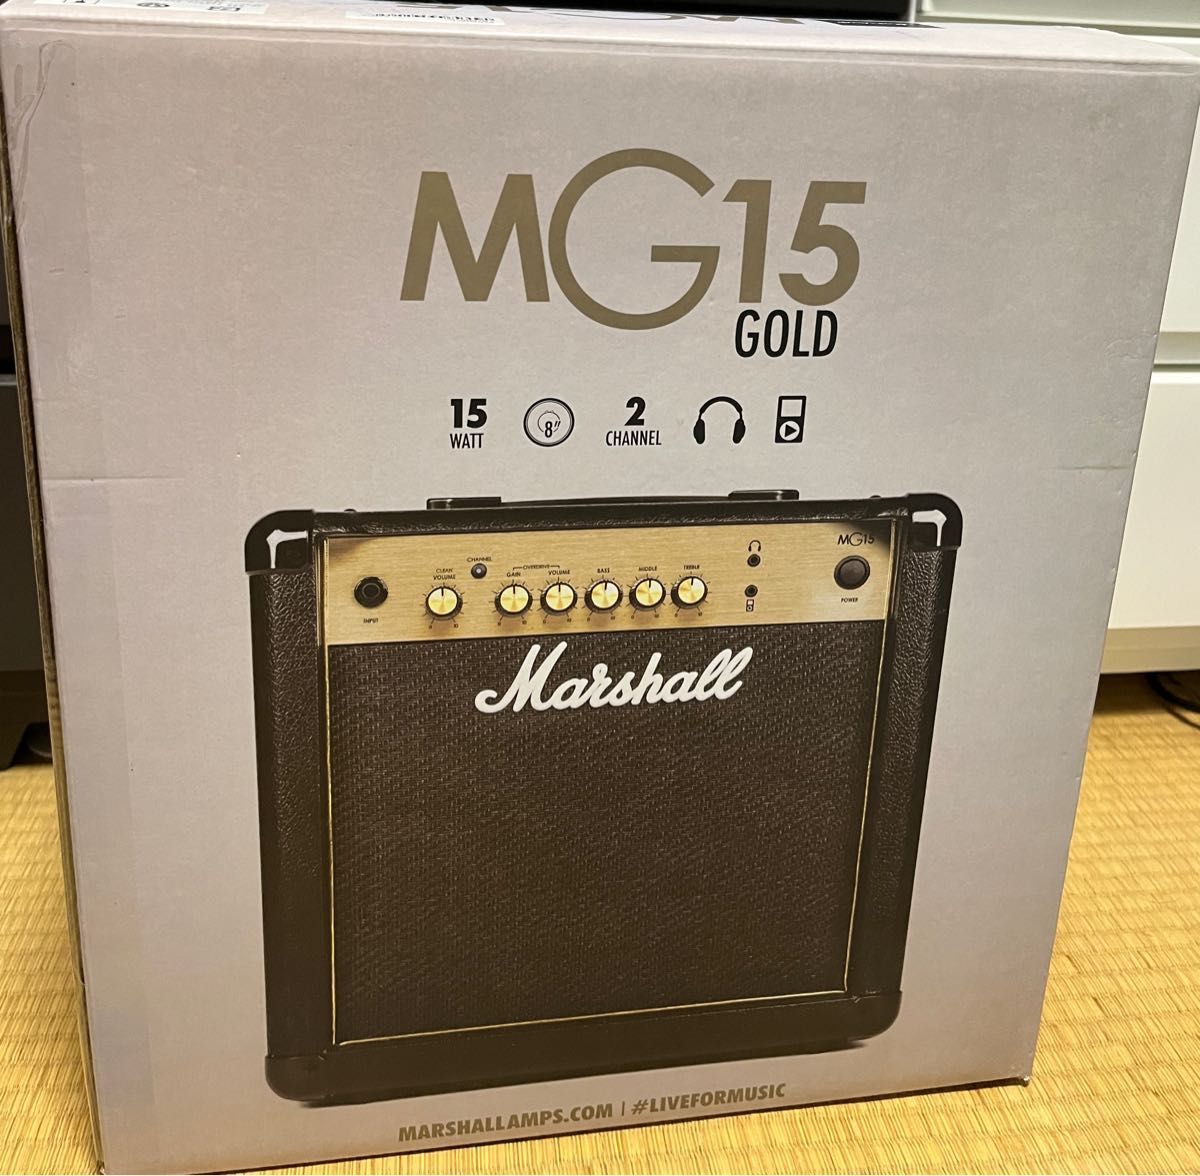 Marshell マーシャル MG15 Gold MG15G ギターアンプ